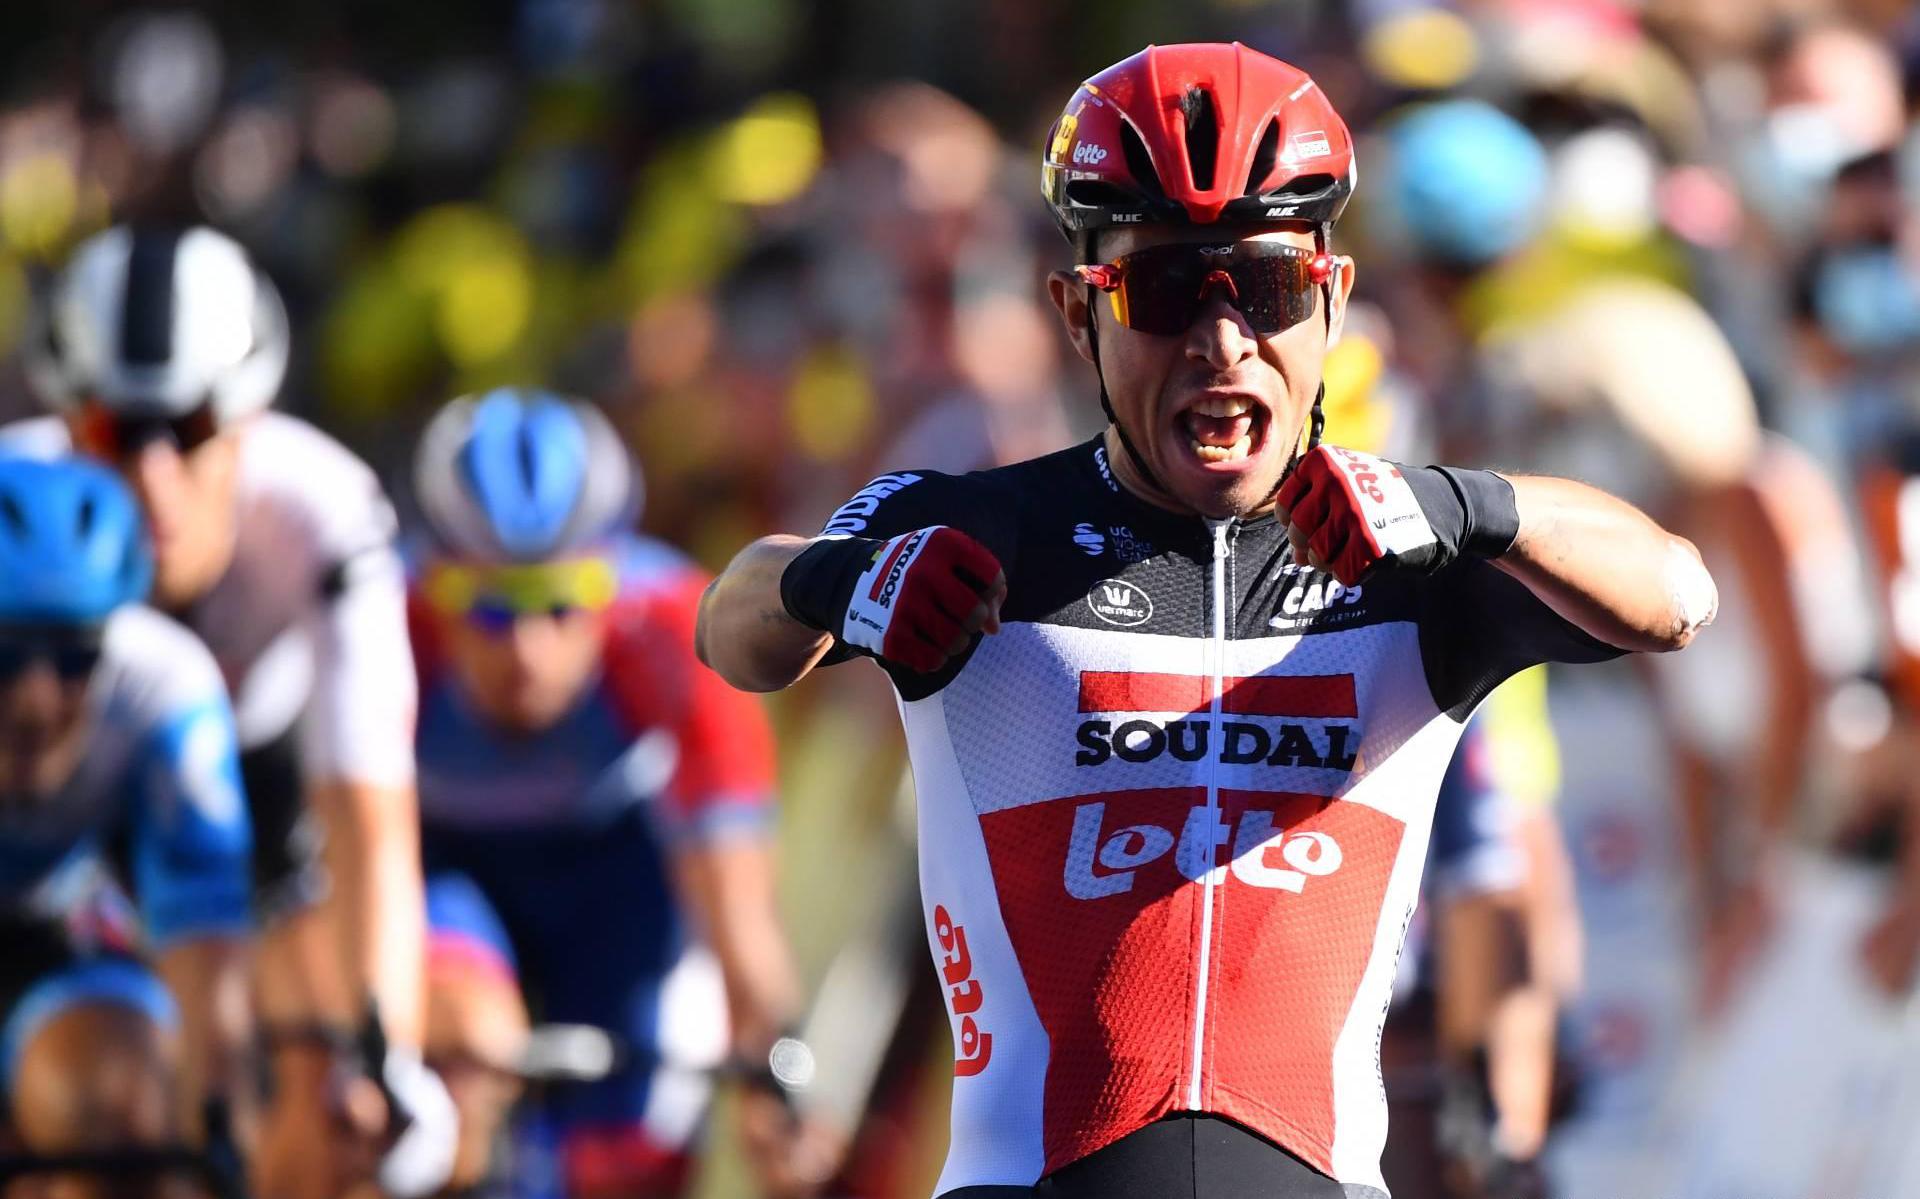 Wielrenner Ewan wint derde etappe Tour de France in massasprint